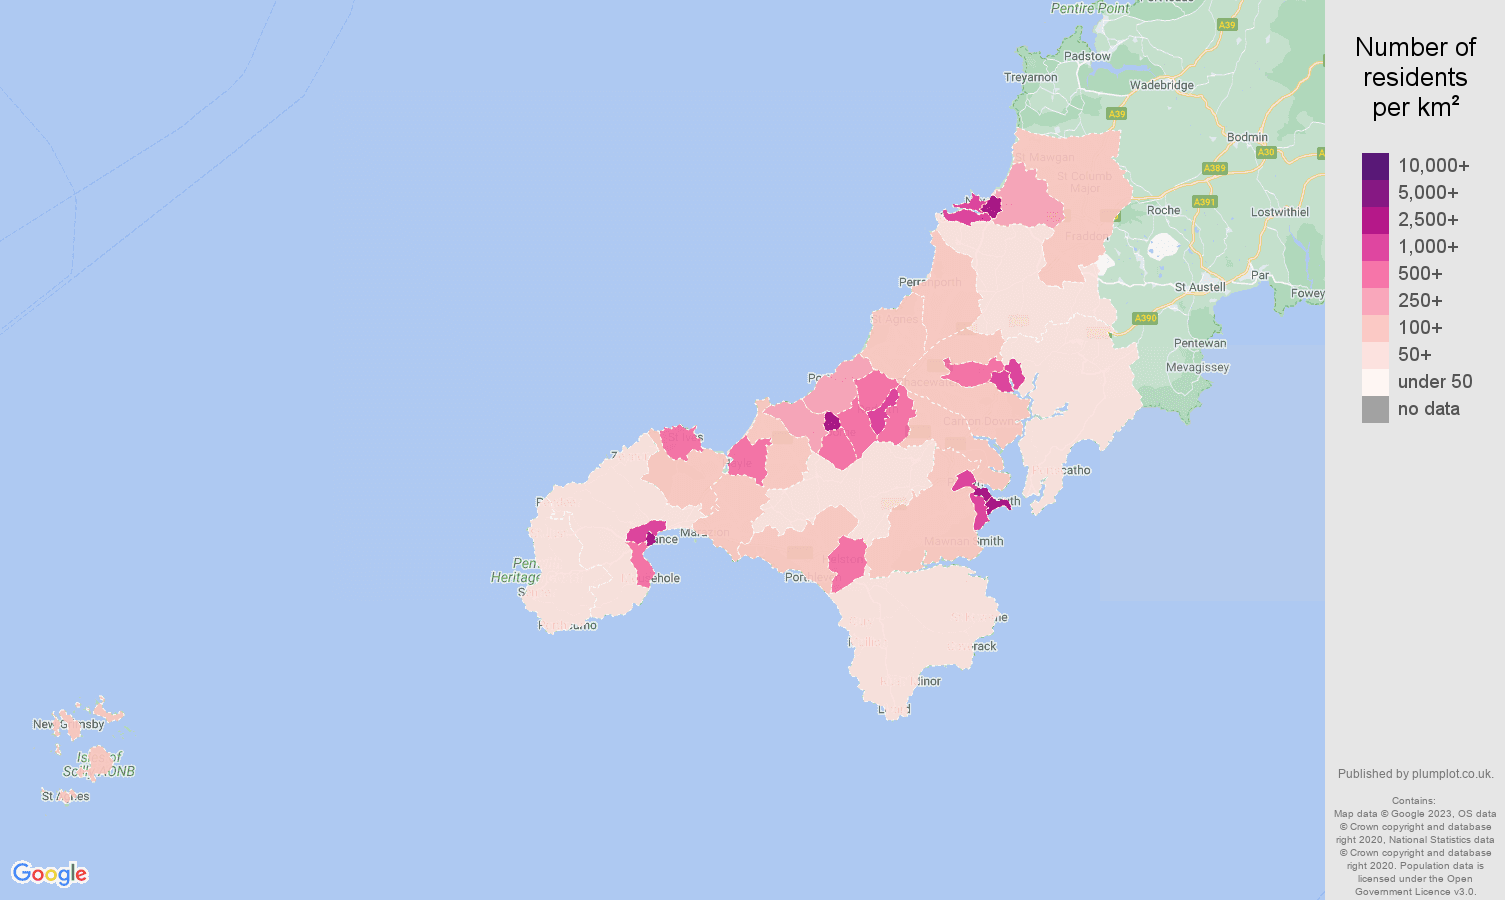 Truro population density map